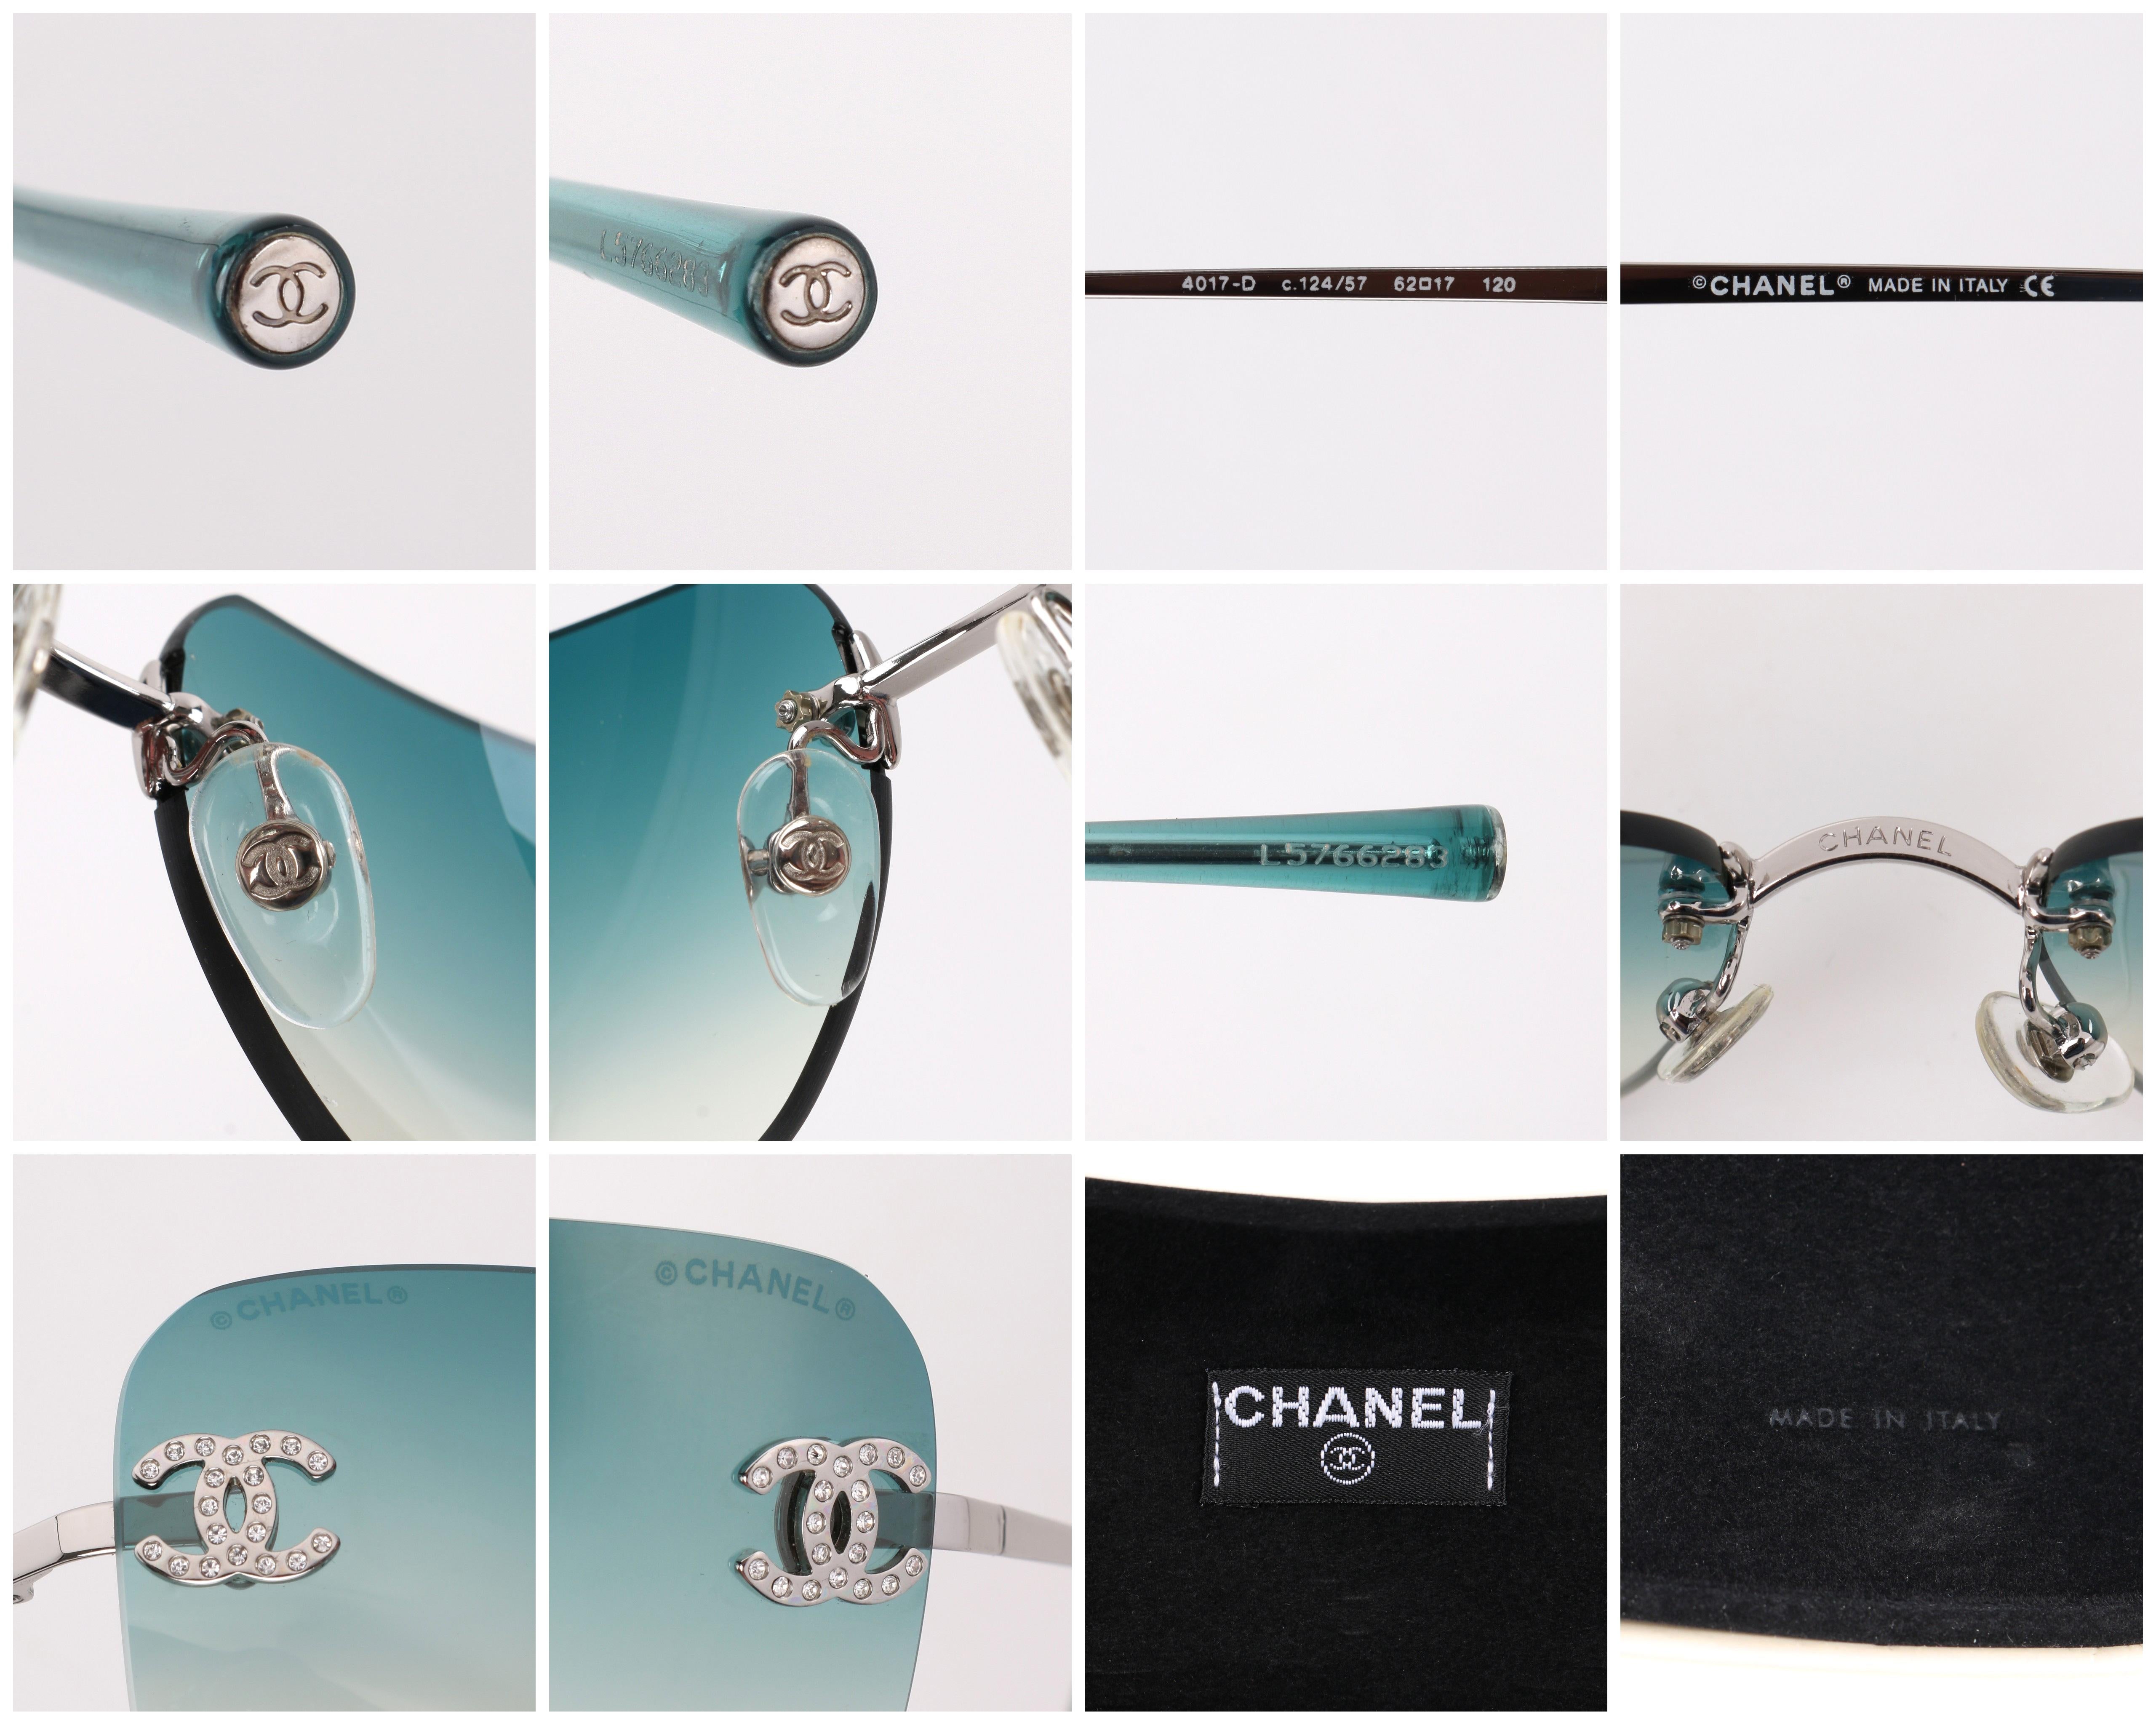 CHANEL Teal Blue Gradient Lens Crystal Rhinestone CC Rimless Sunglasses 4017-D 3